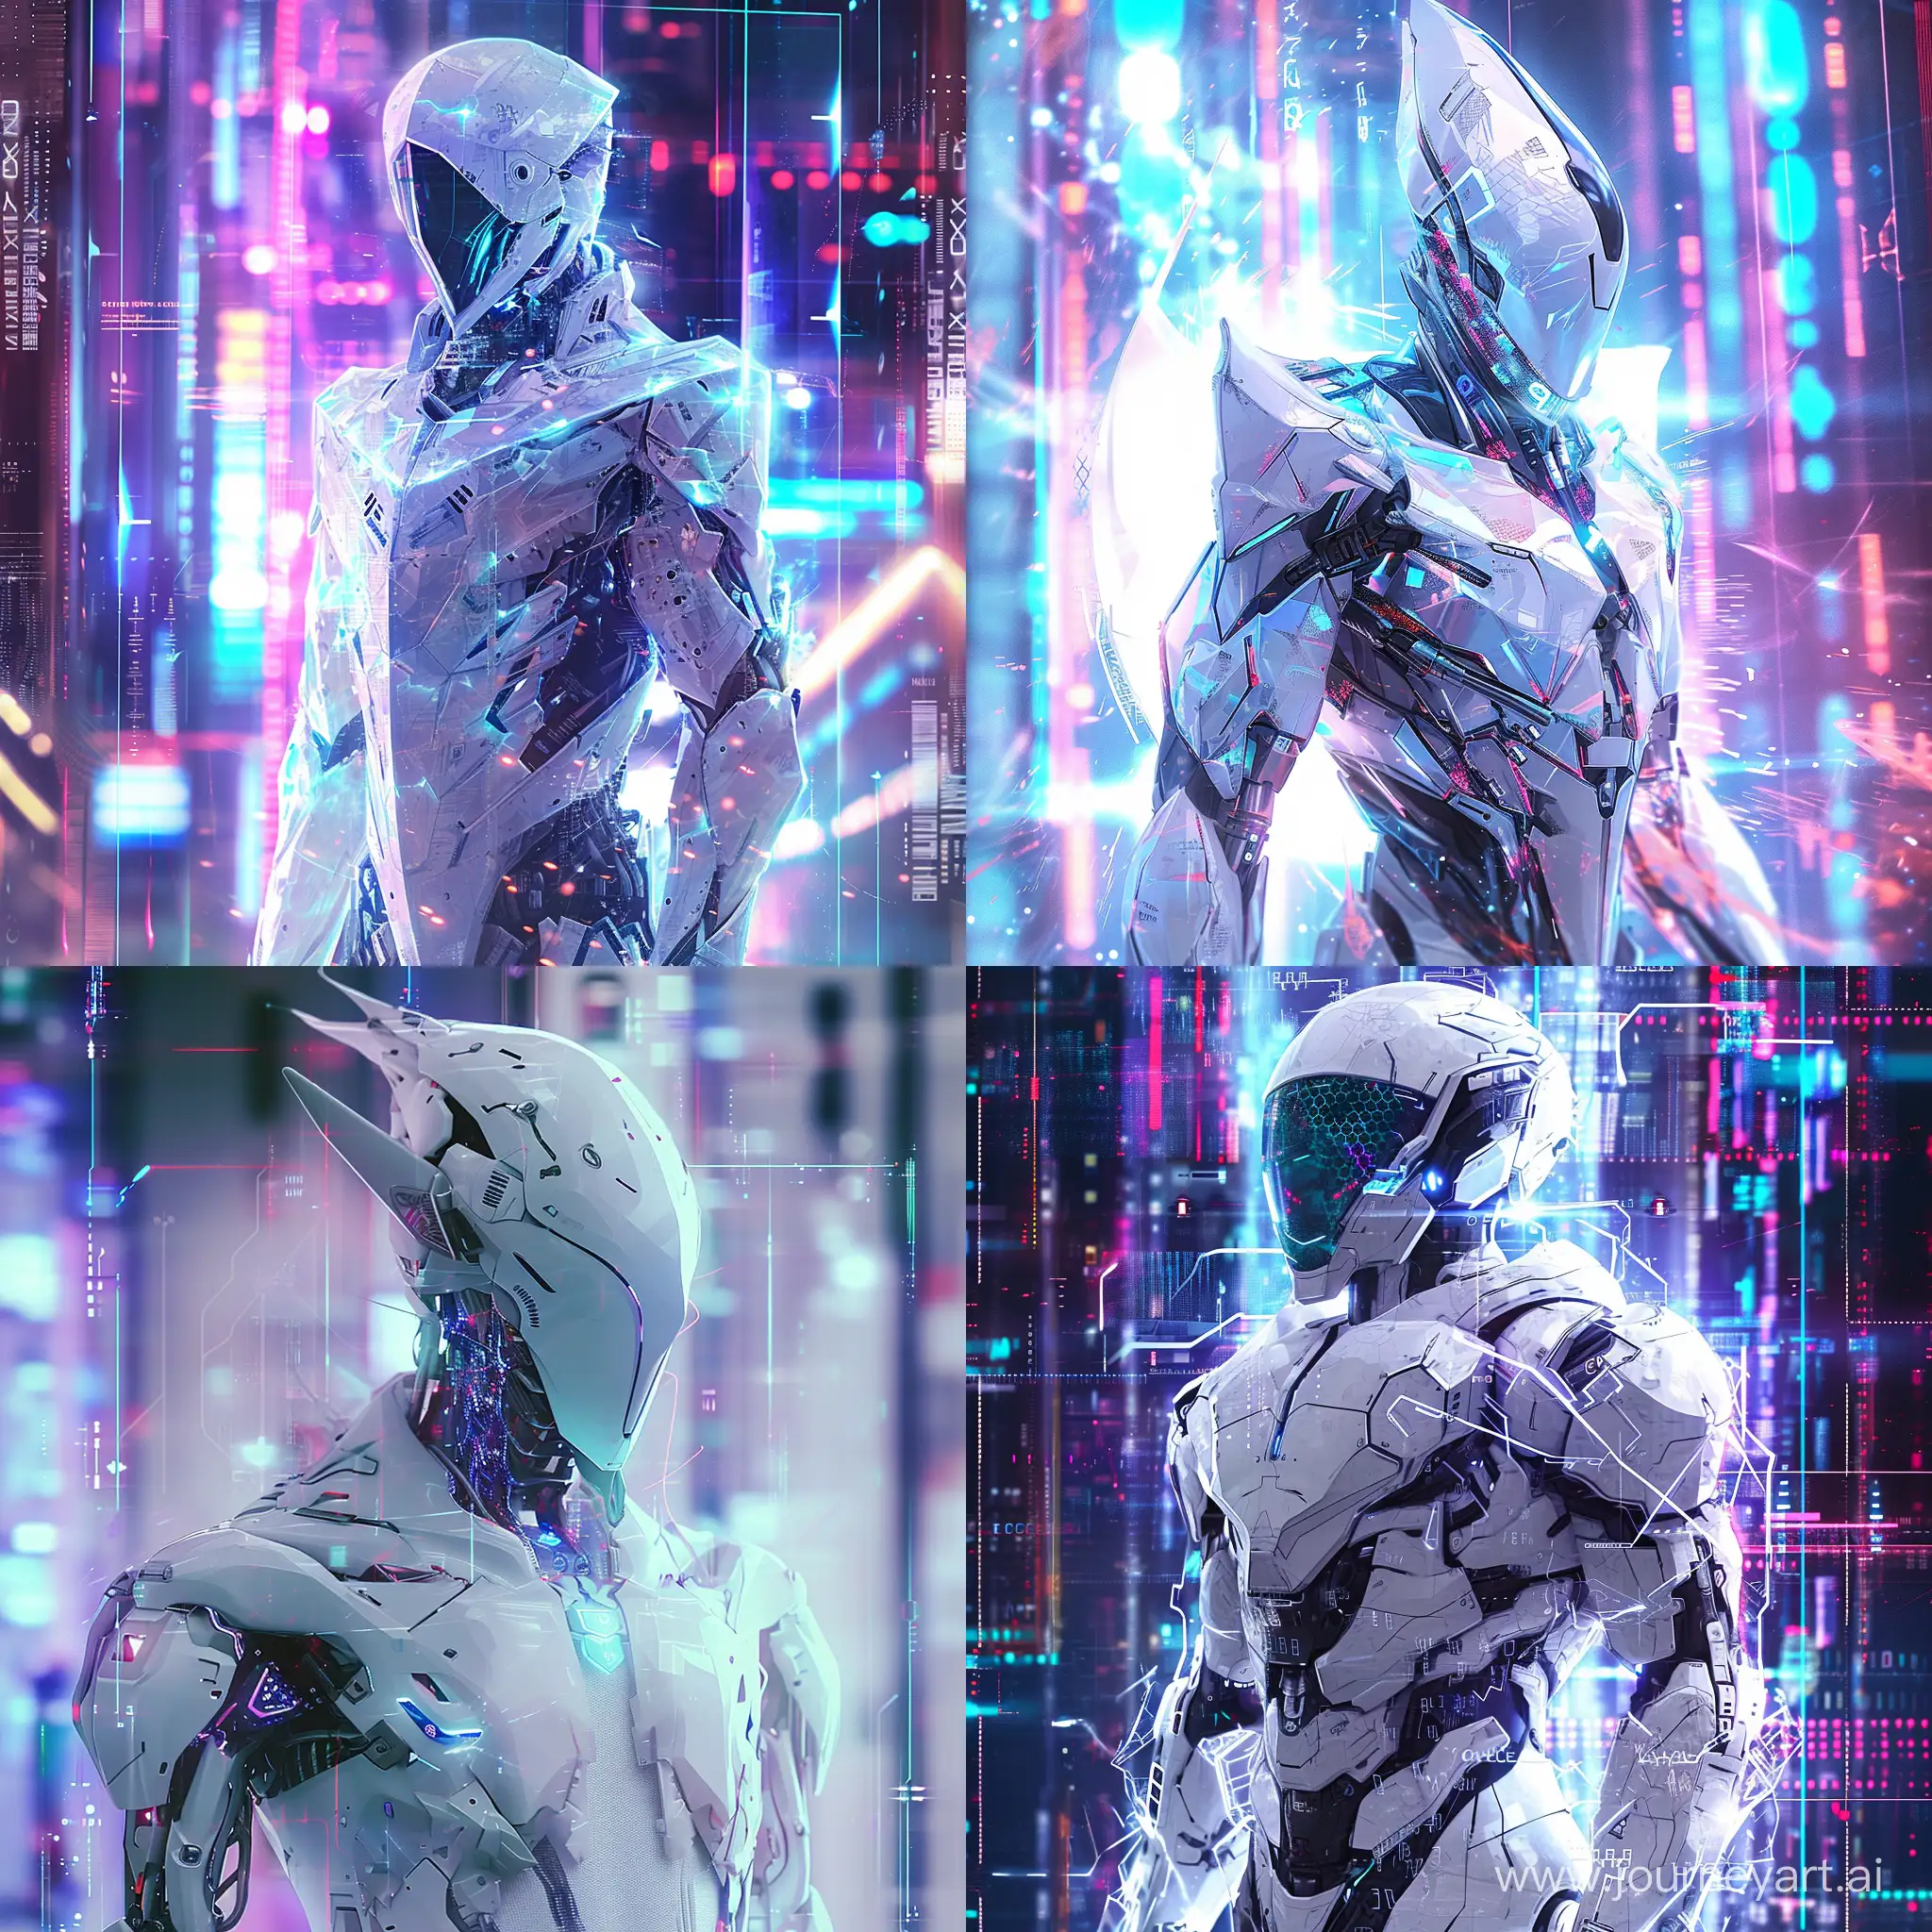 Futuristic-Cybernetic-White-Knight-Hologram-in-SciFi-Setting